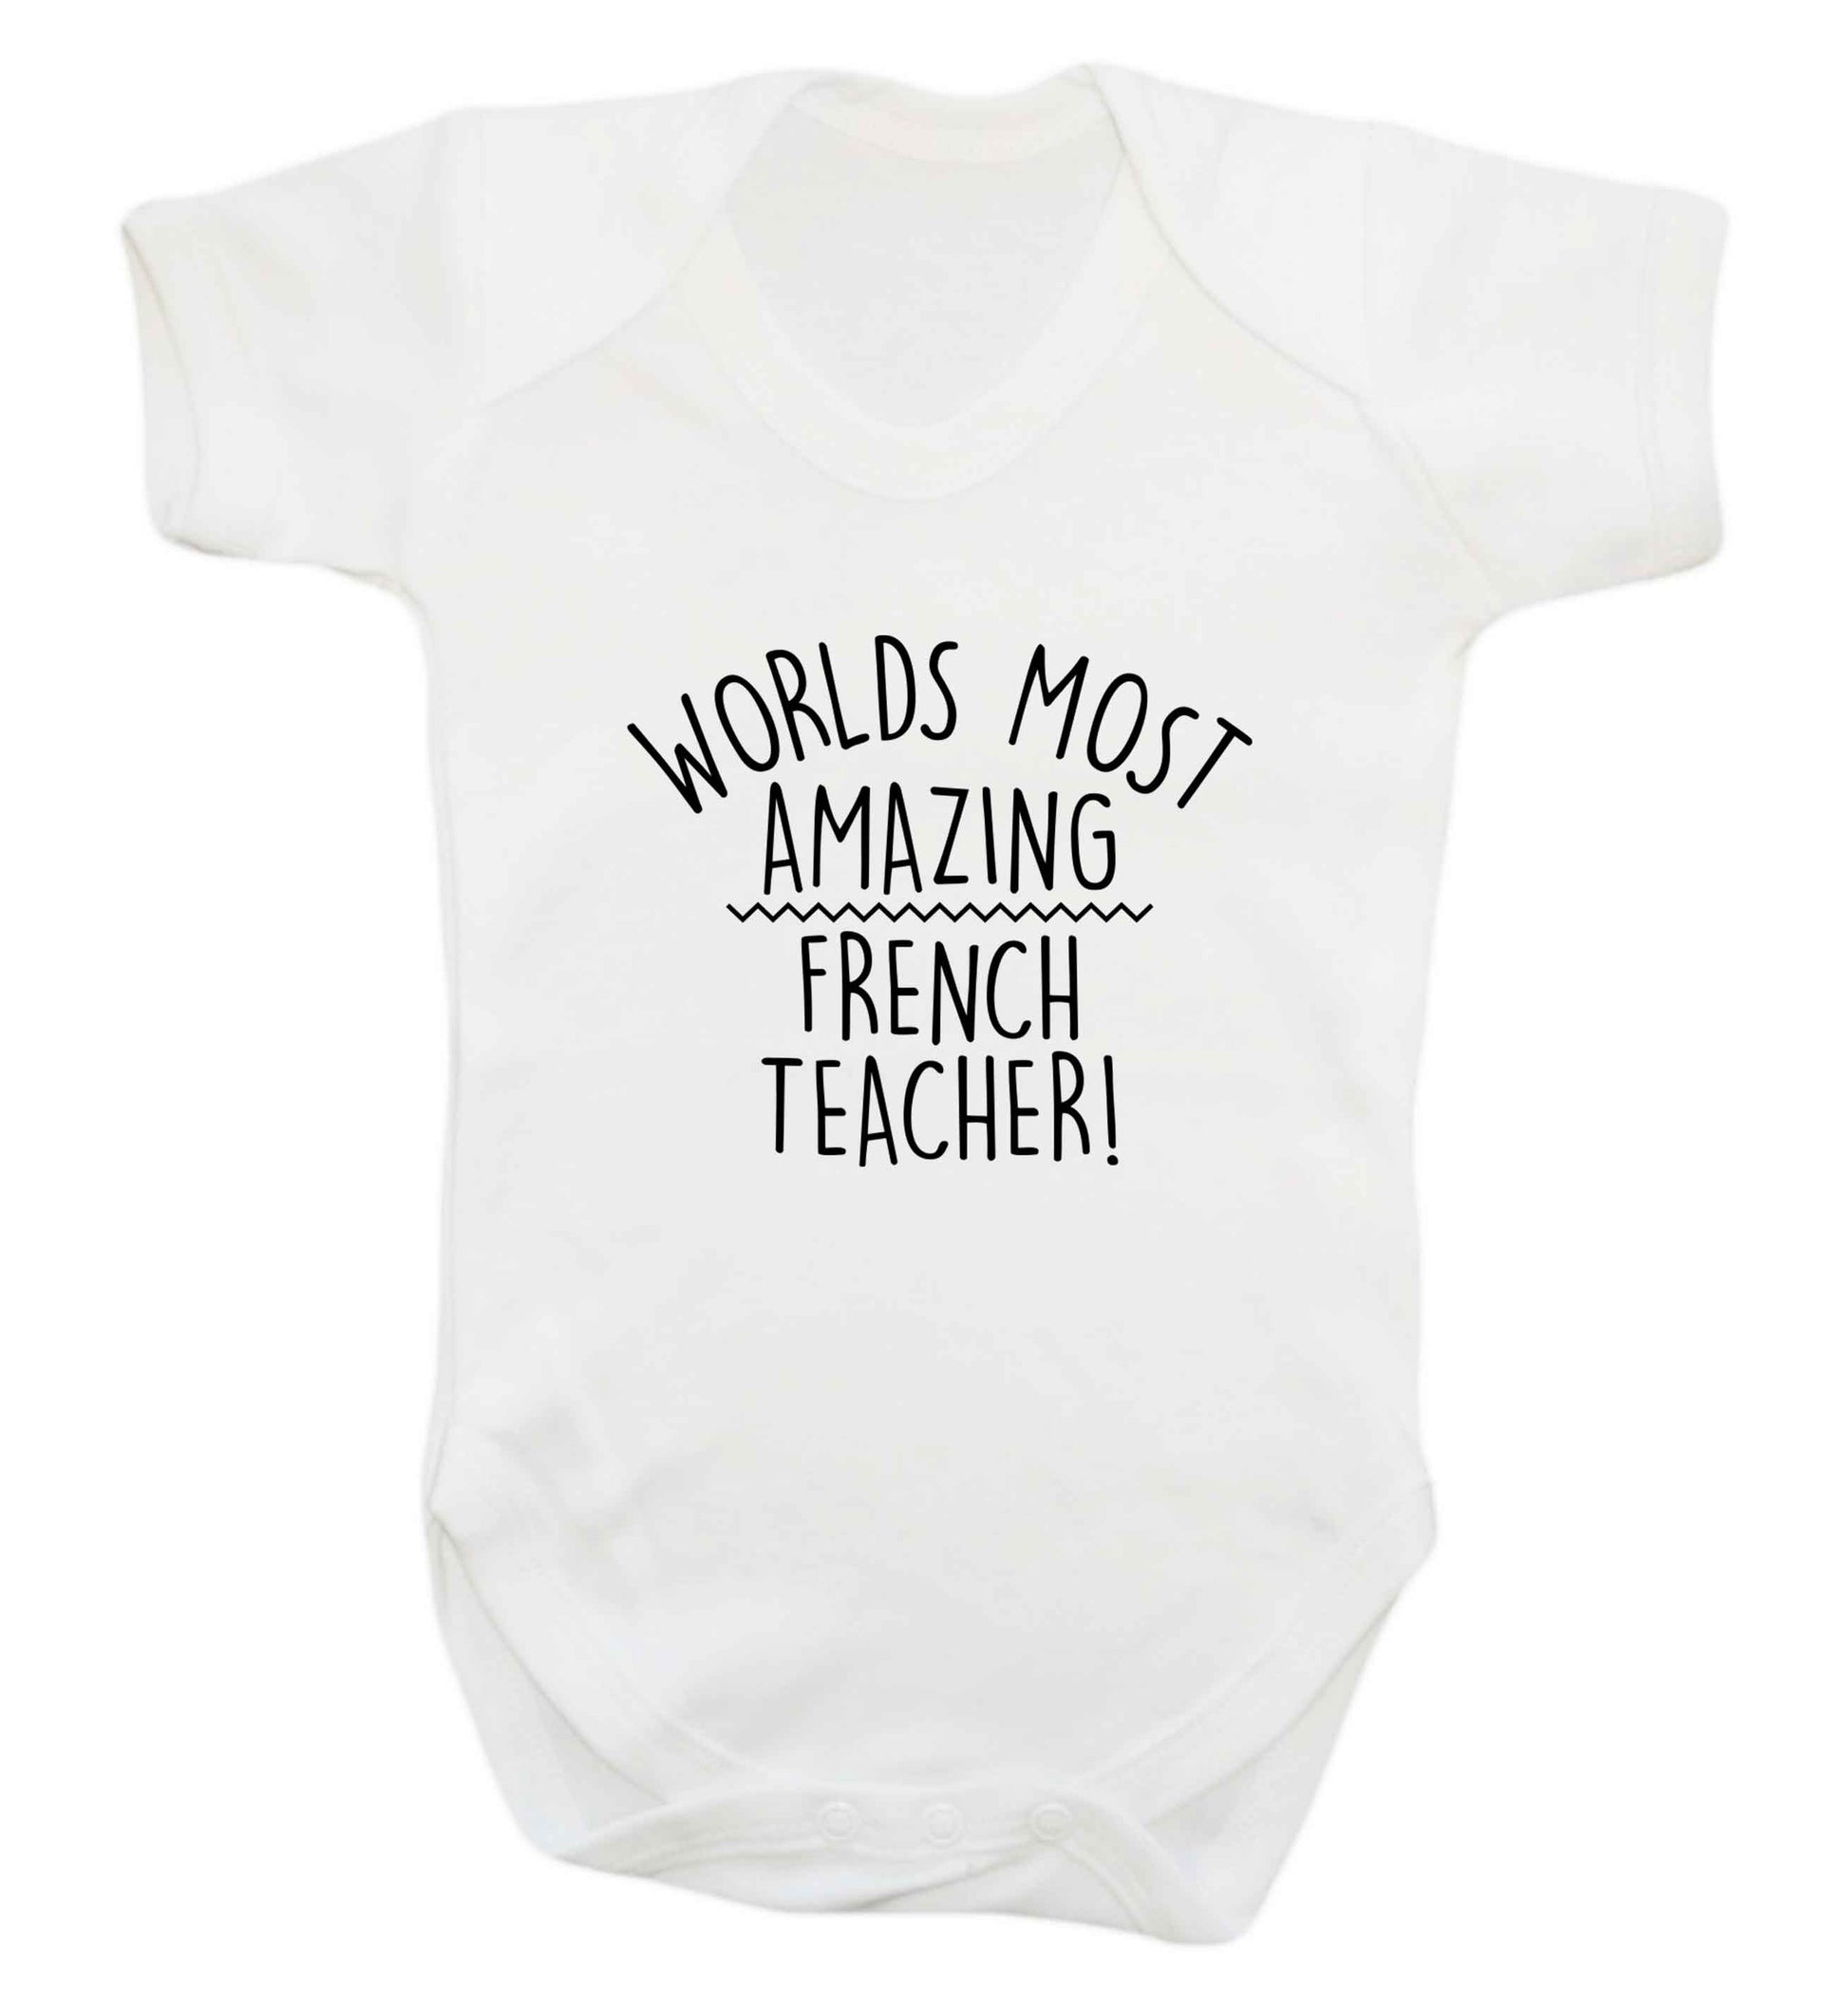 Worlds most amazing French teacher baby vest white 18-24 months